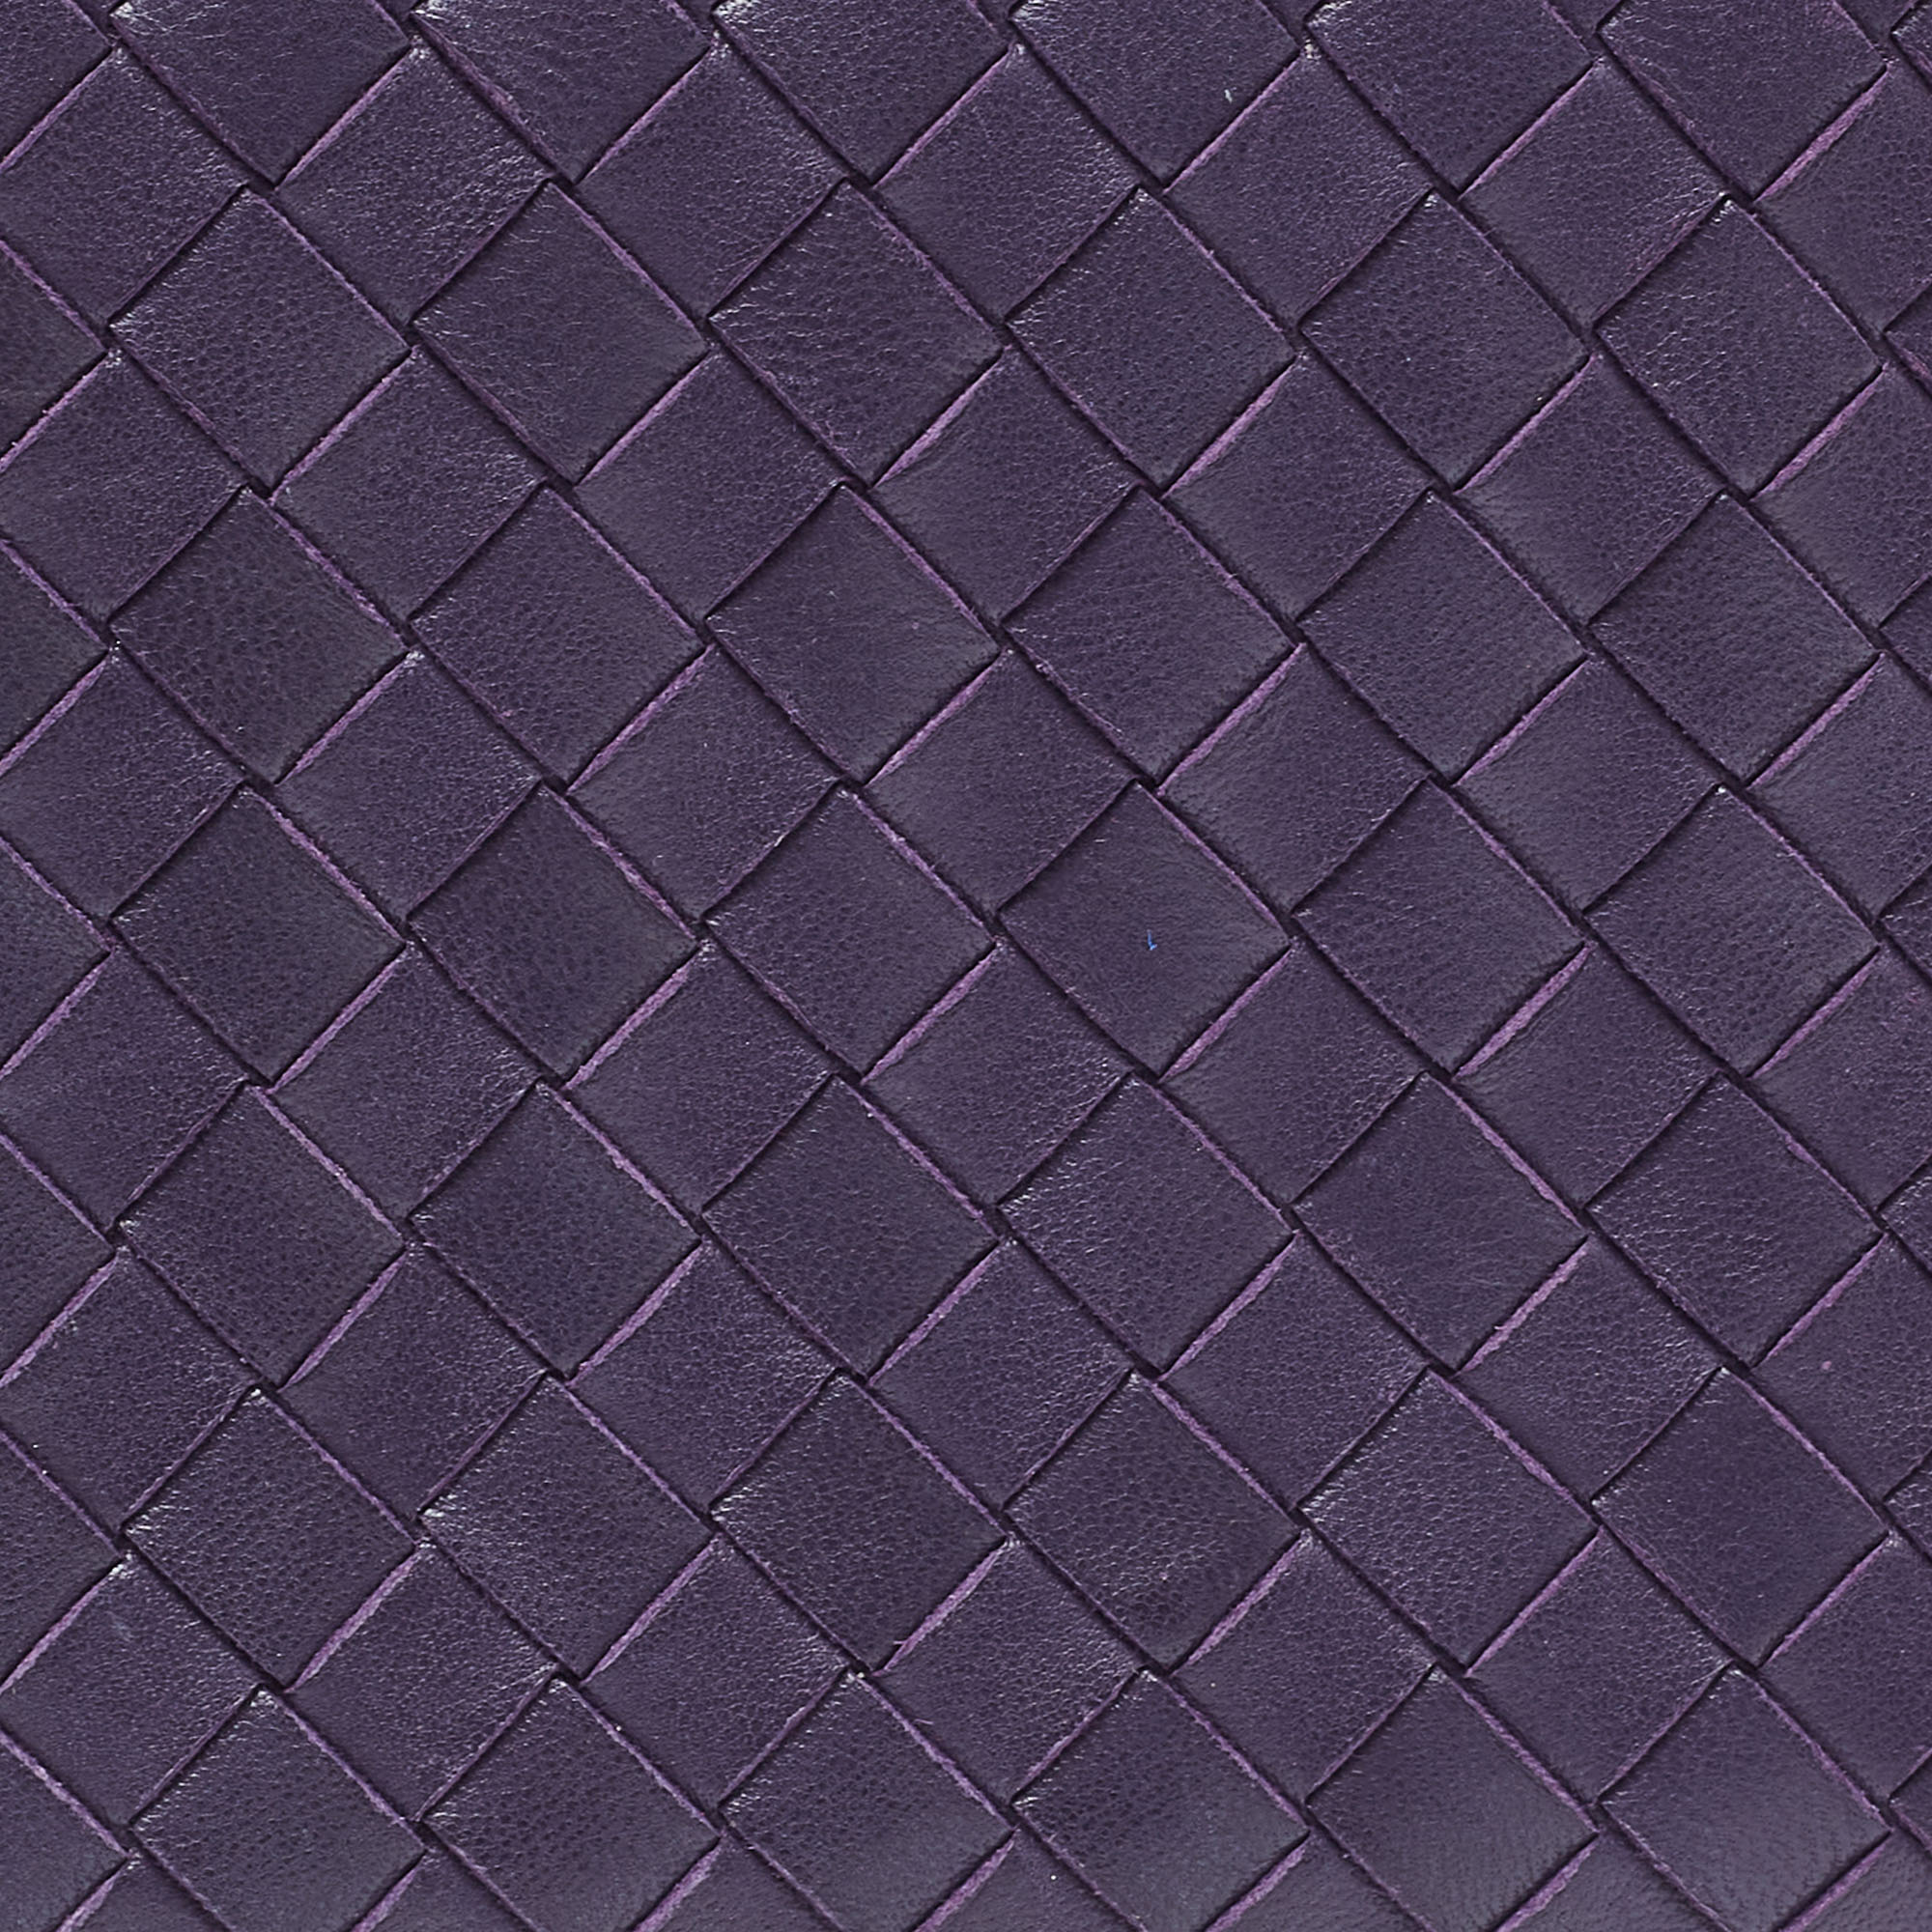 Bottega Veneta Purple Intrecciato Leather Zip Around Wallet